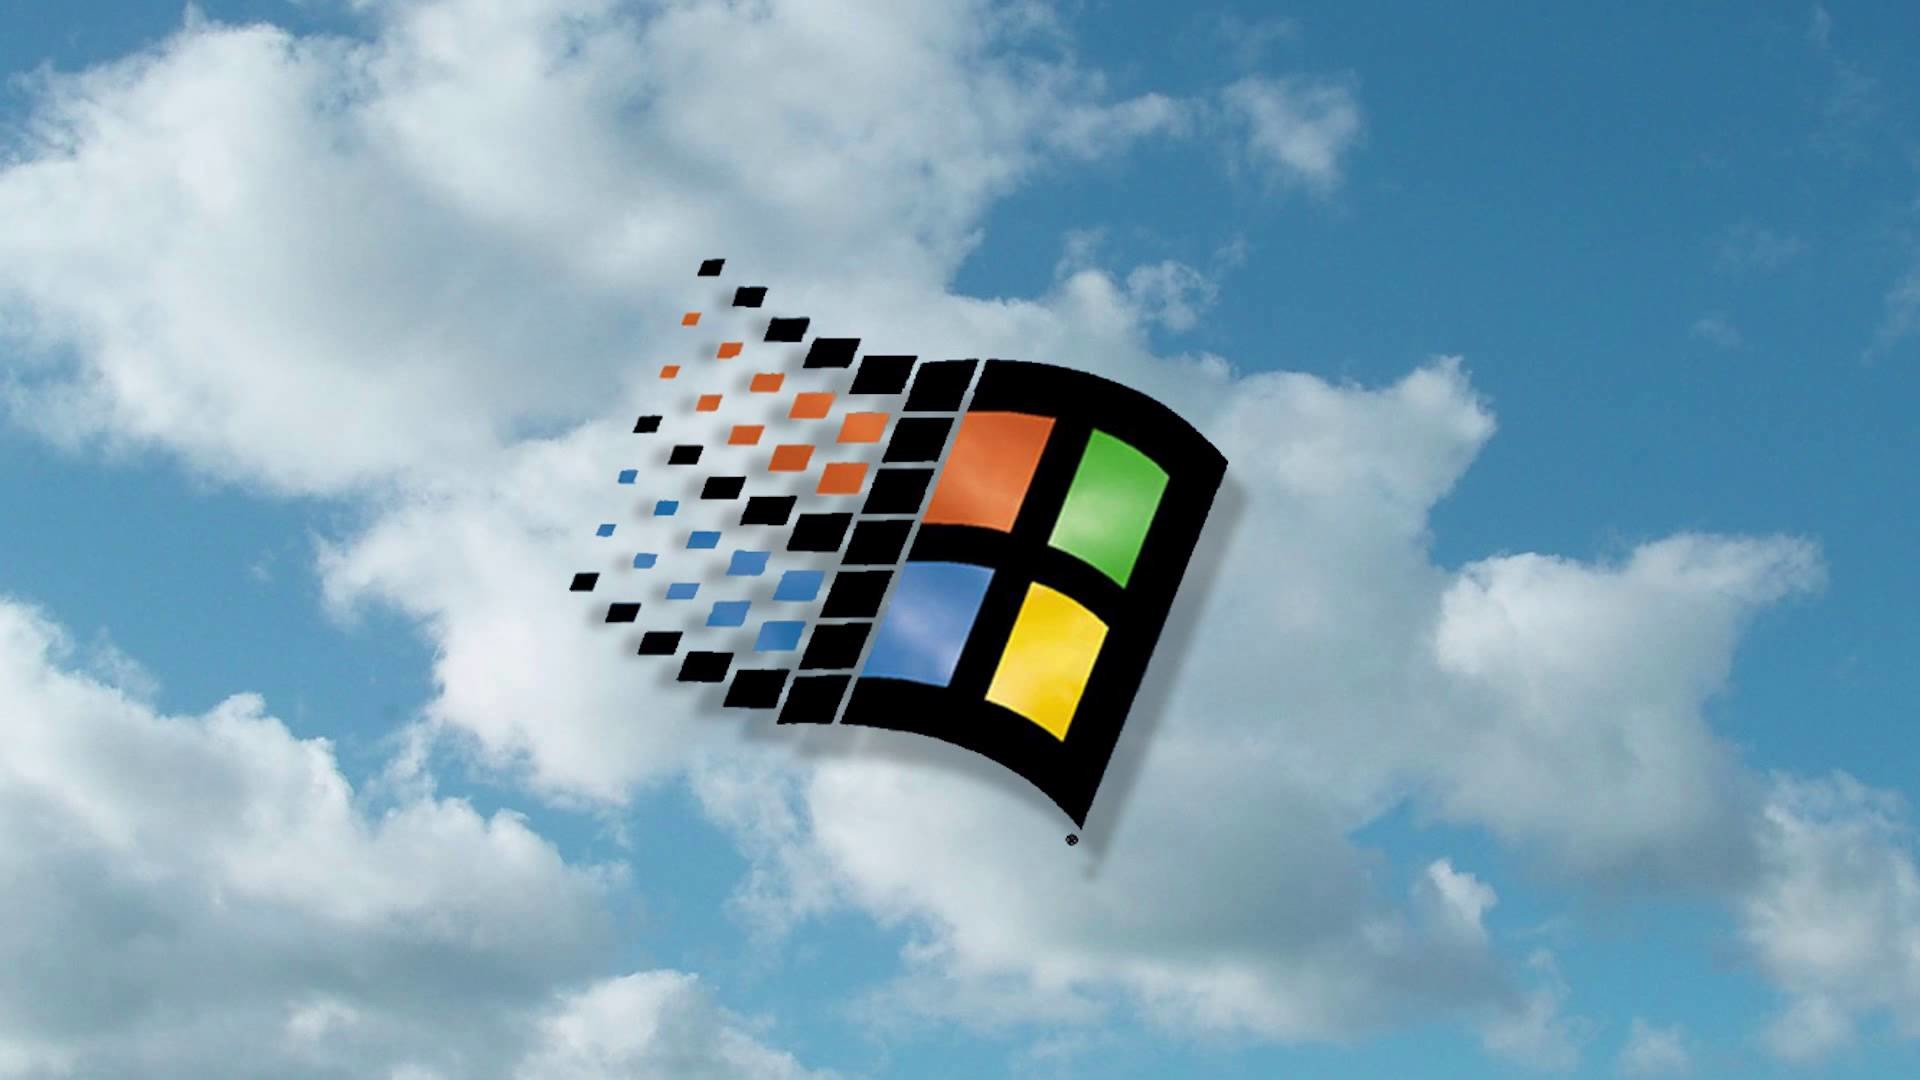 Windows 95 Background